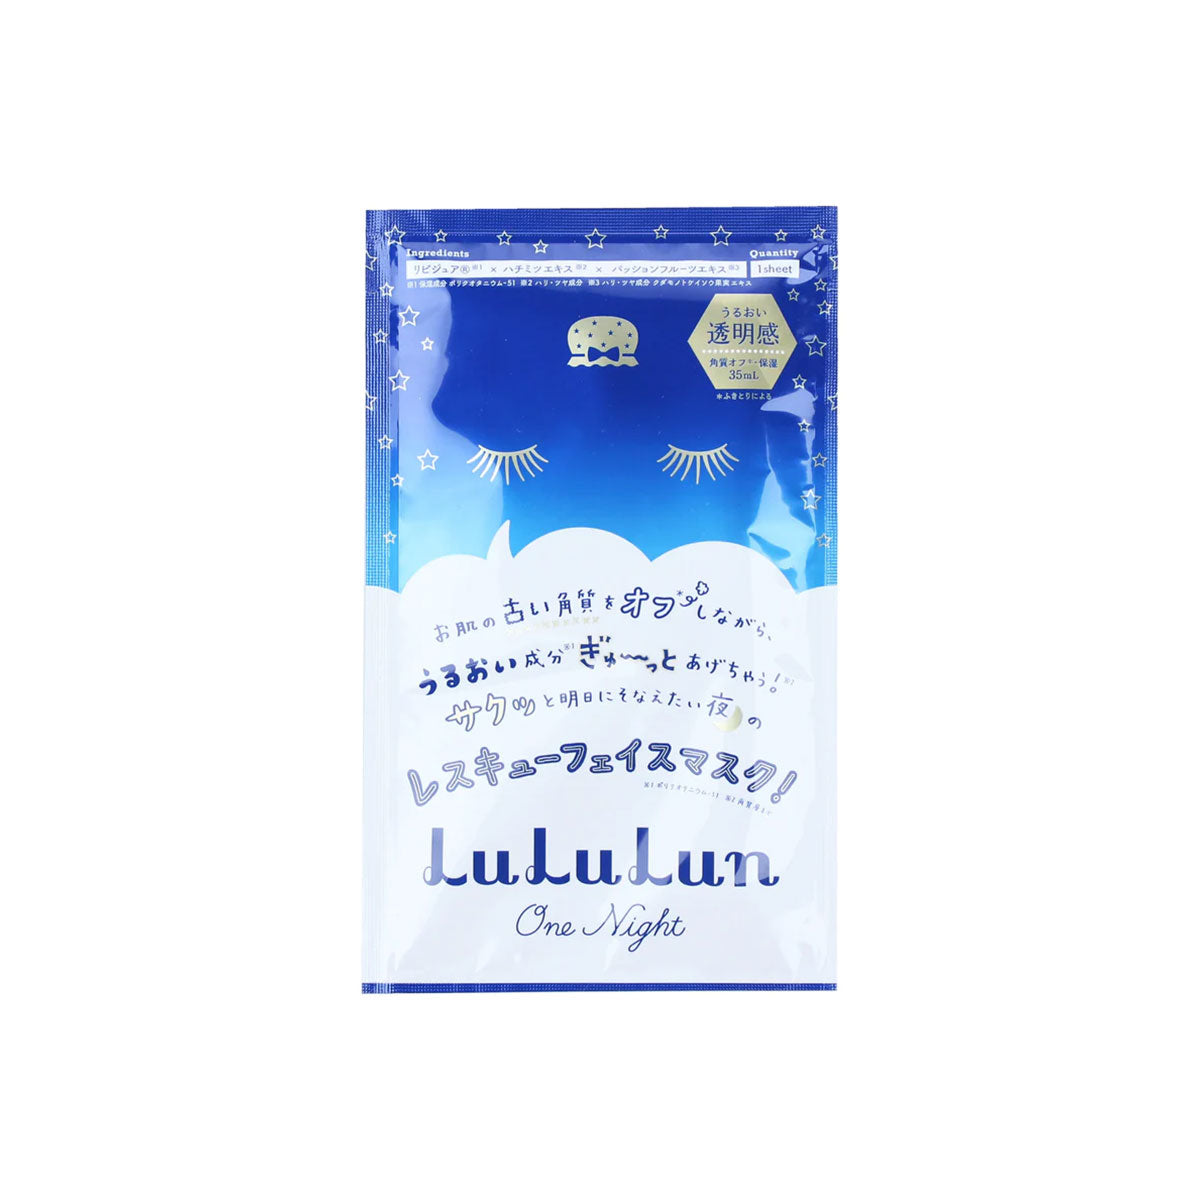 Lululun One Night Rescue Clarify Skin 1 Sheet